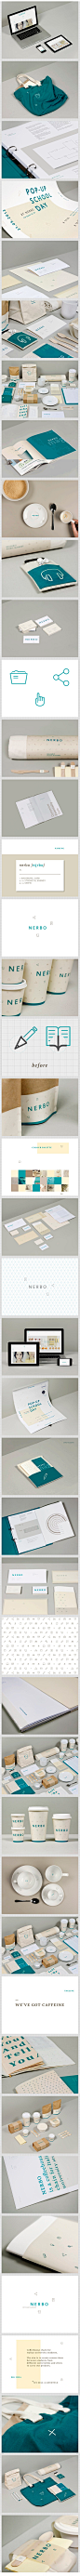 【NERBO咖啡店品牌设计】 
这是一个咖啡店品牌的VI设计，包括了杯子，手提袋，标志，手册等。